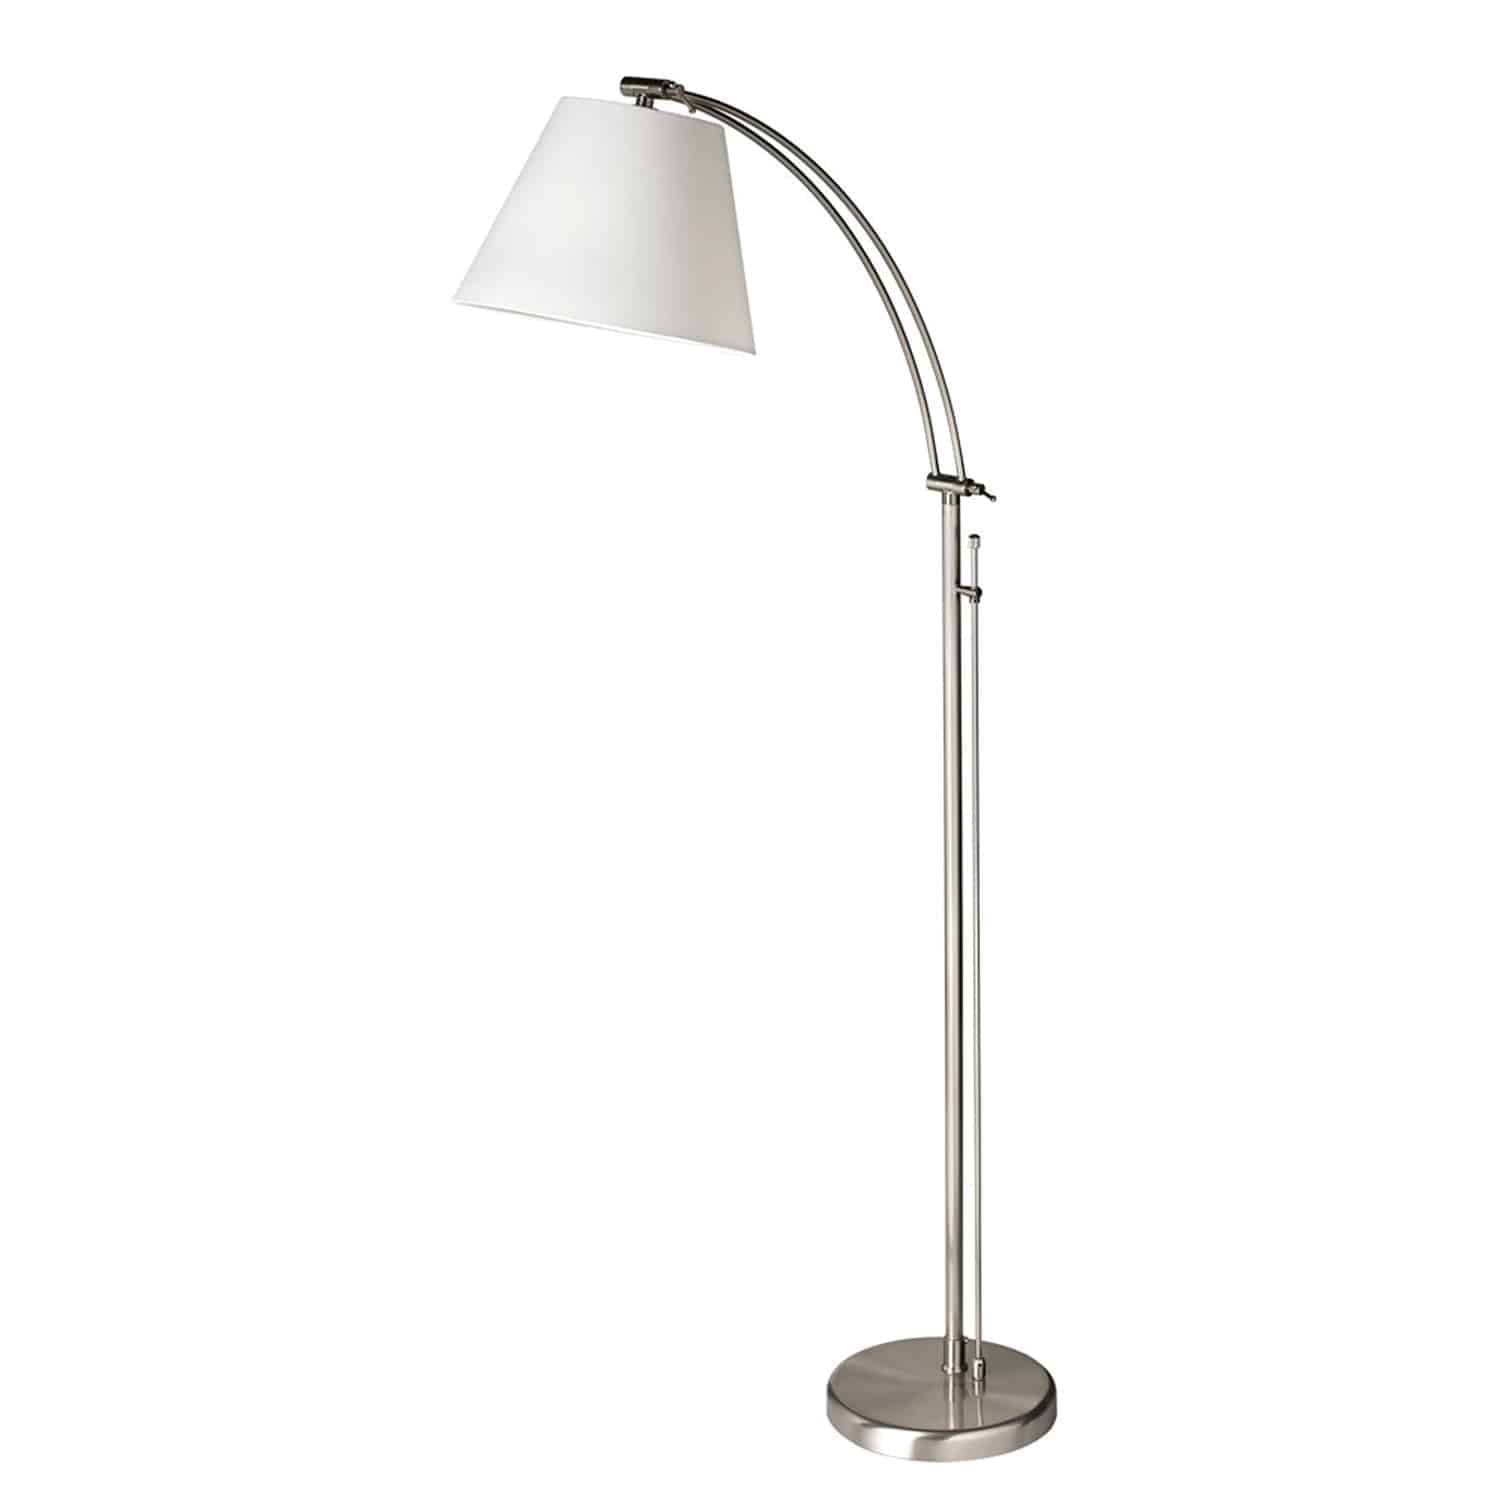 Adjustable Floor Lamp - White Shade